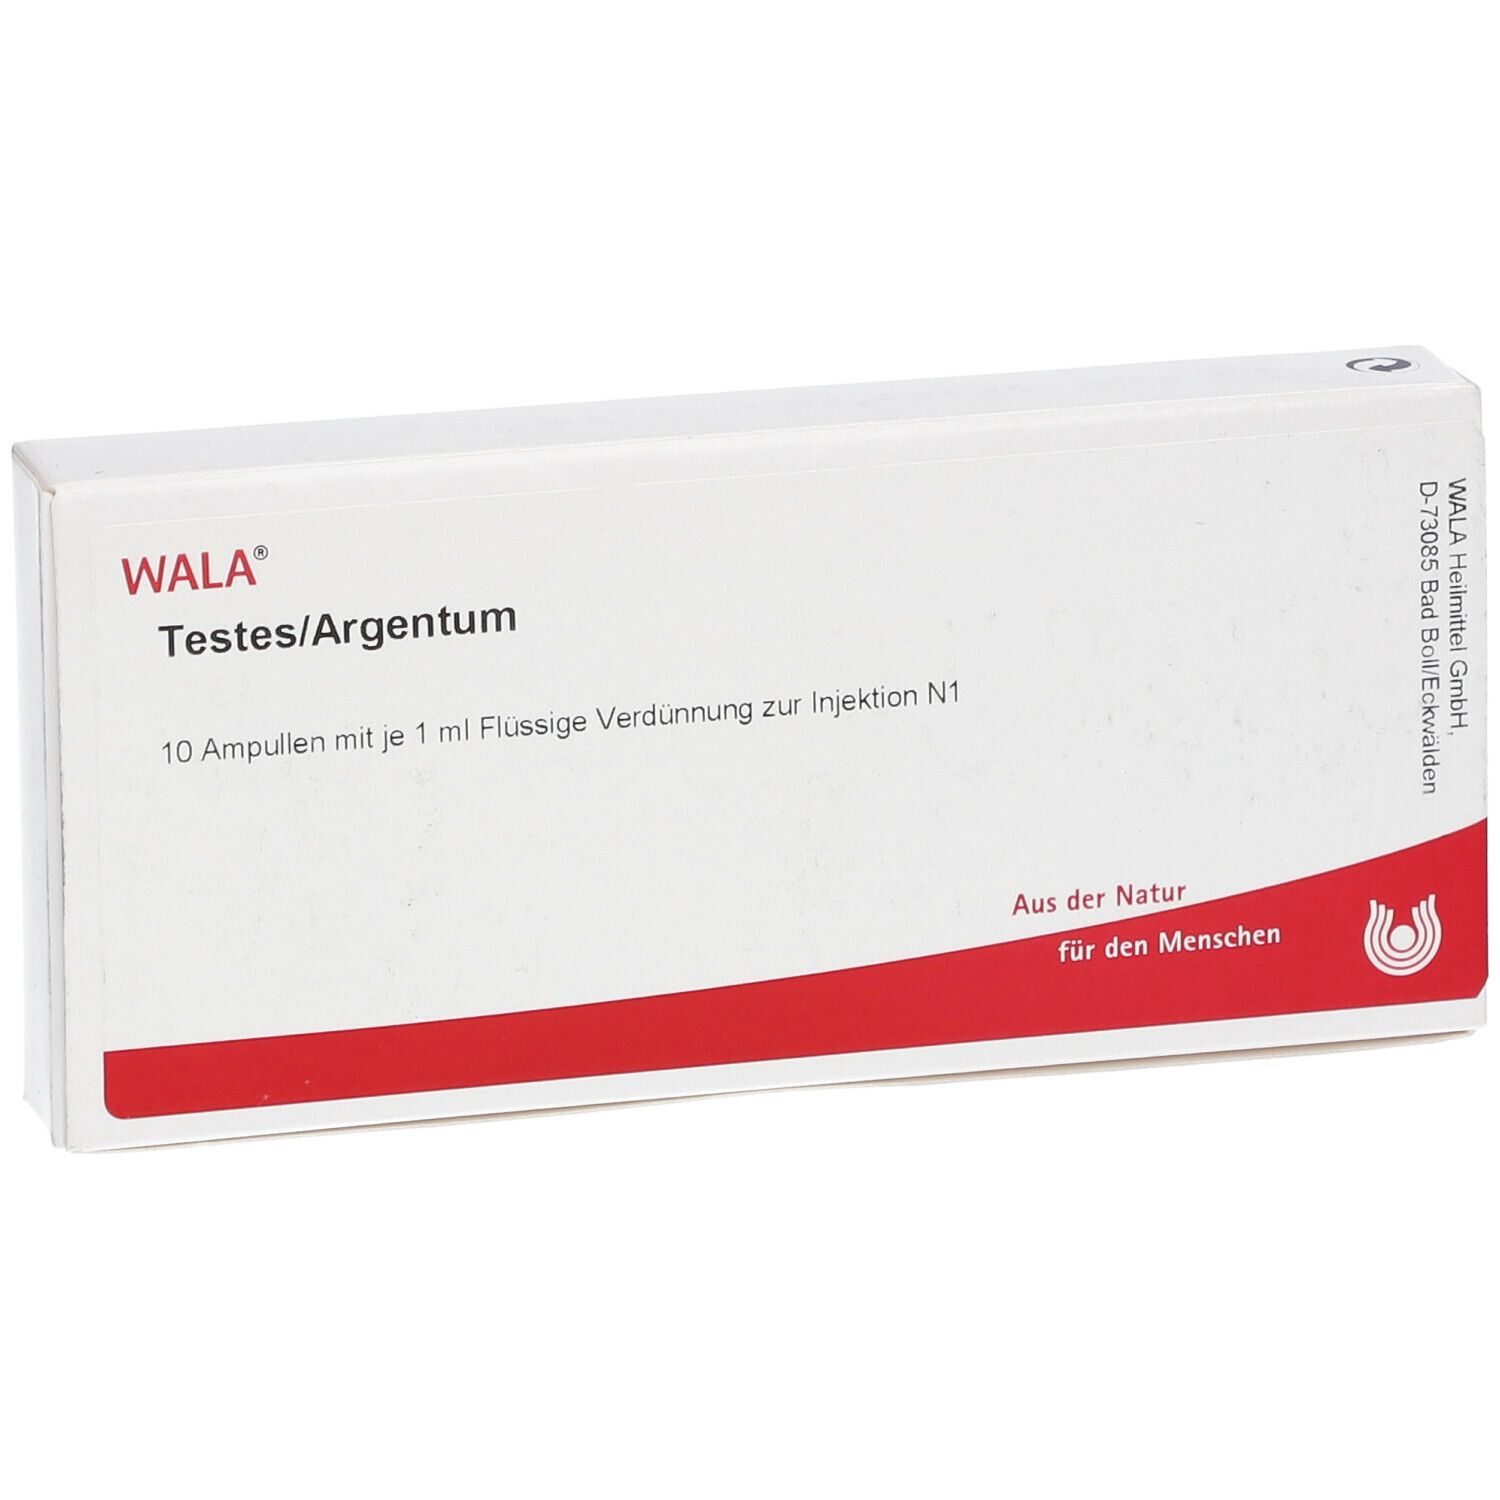 WALA® Testes/Argentum